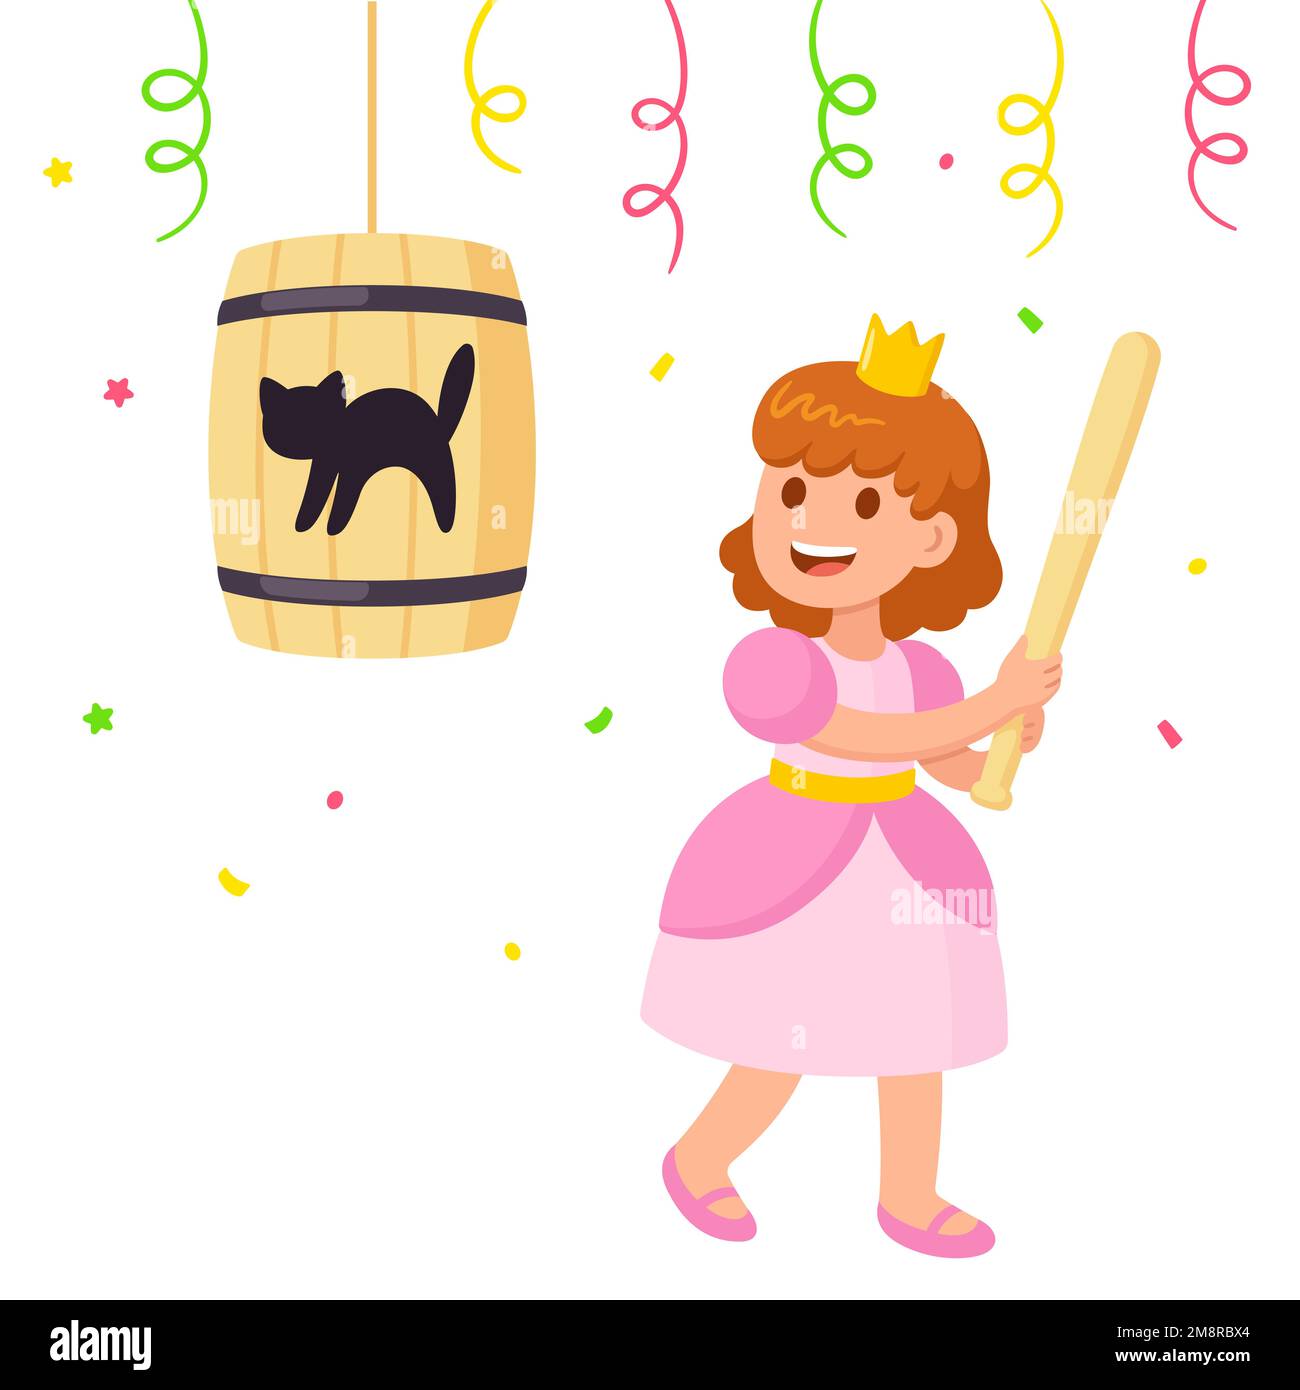 Fastelavn celebration in Denmark. Little girl in princess dress hitting cat barrel with a bat. Cute cartoon vector illustration. Stock Vector